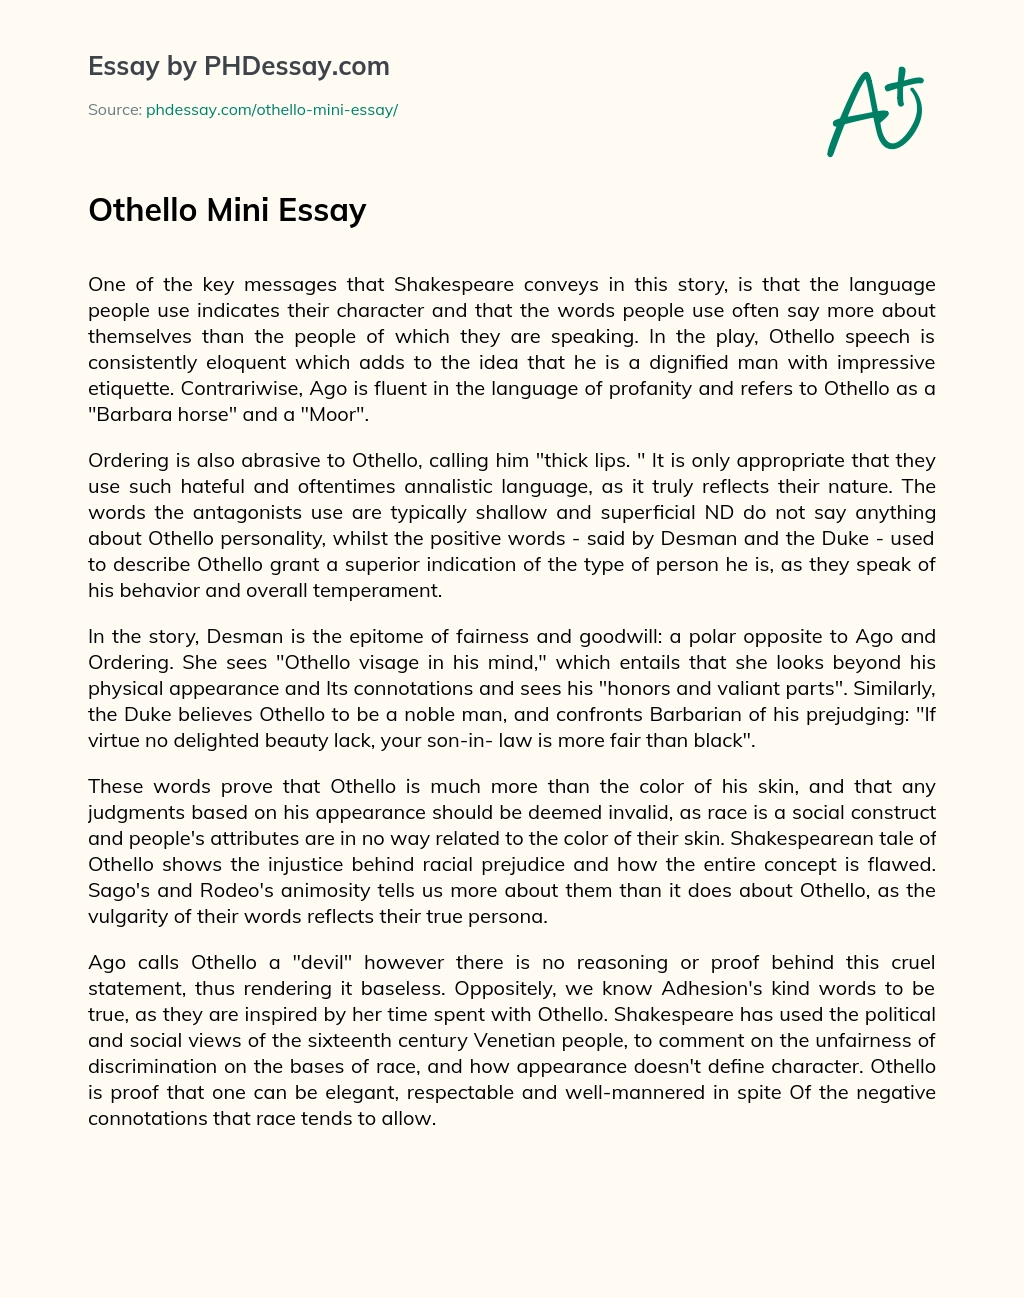 Othello Mini Essay essay